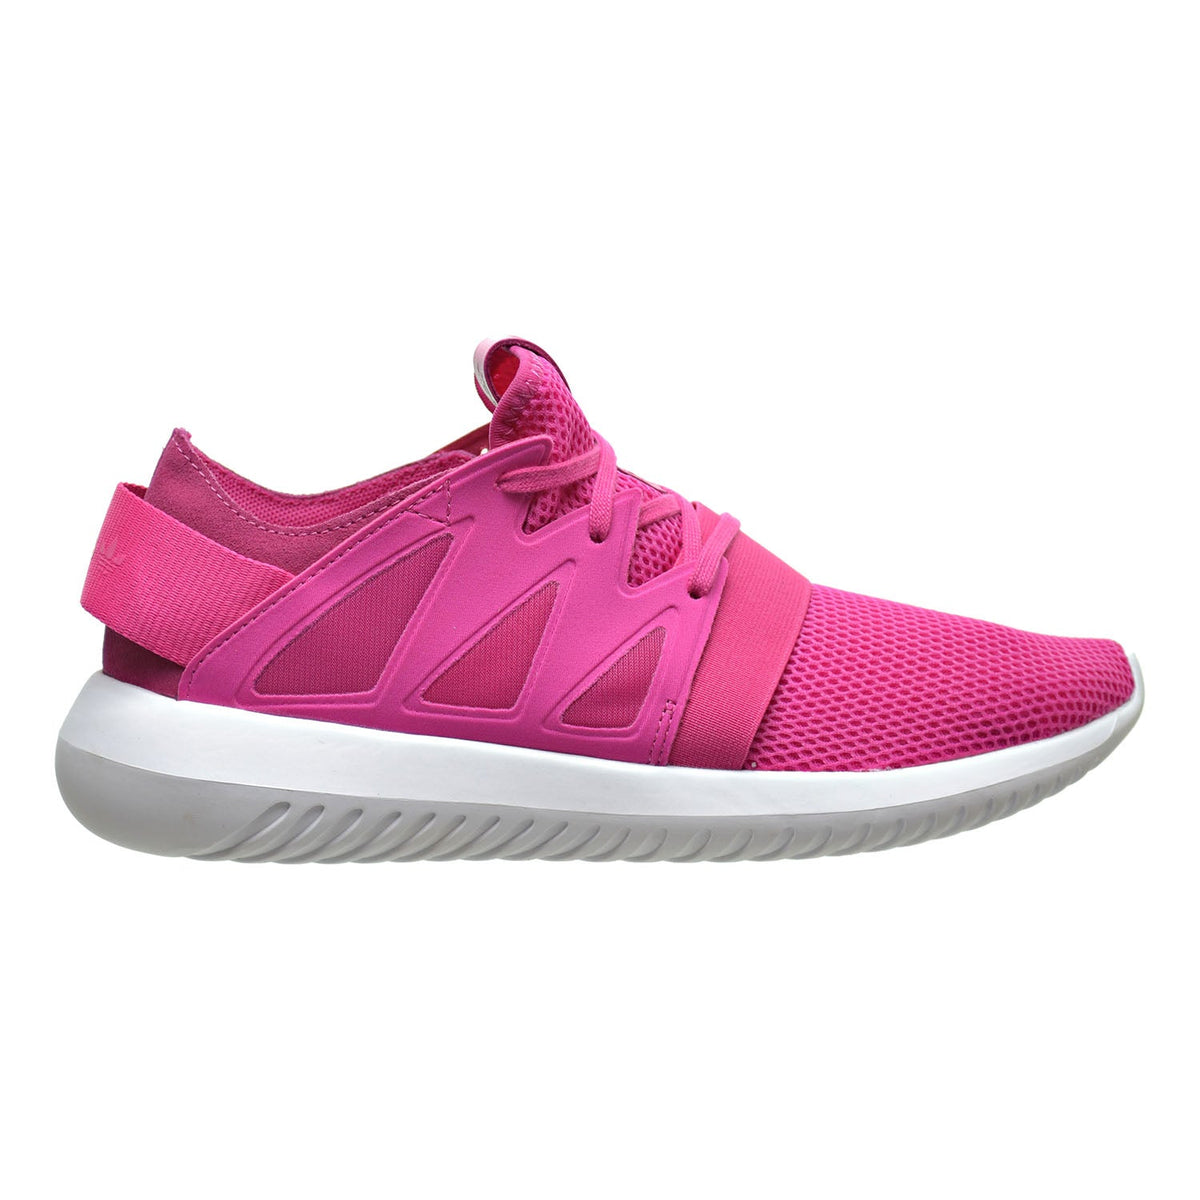 Adidas Tubular Viral W Shoes Equipment Pink Sports Plaza NY